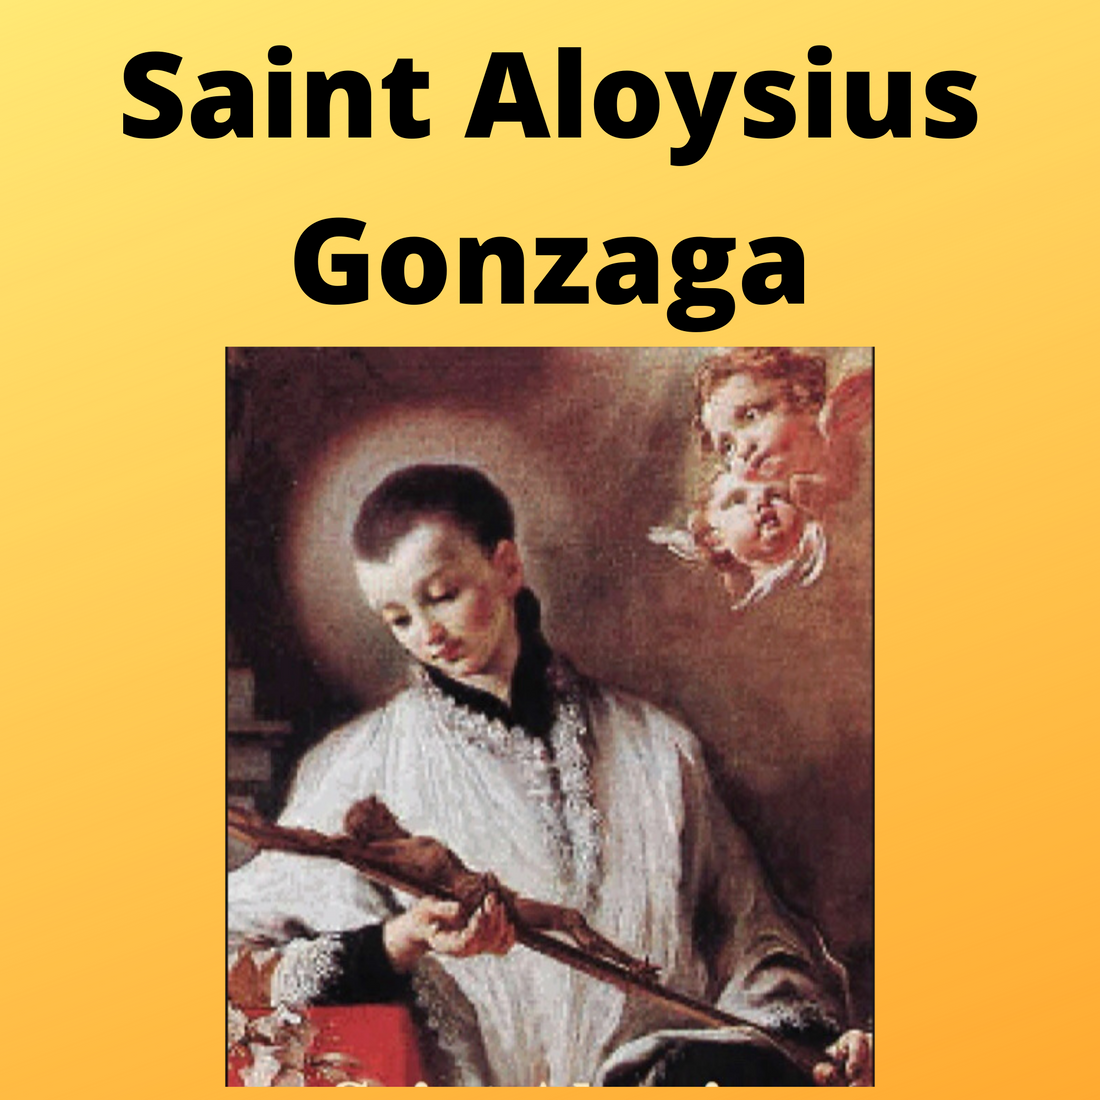 Saint Aloysius Gonzaga and the plague